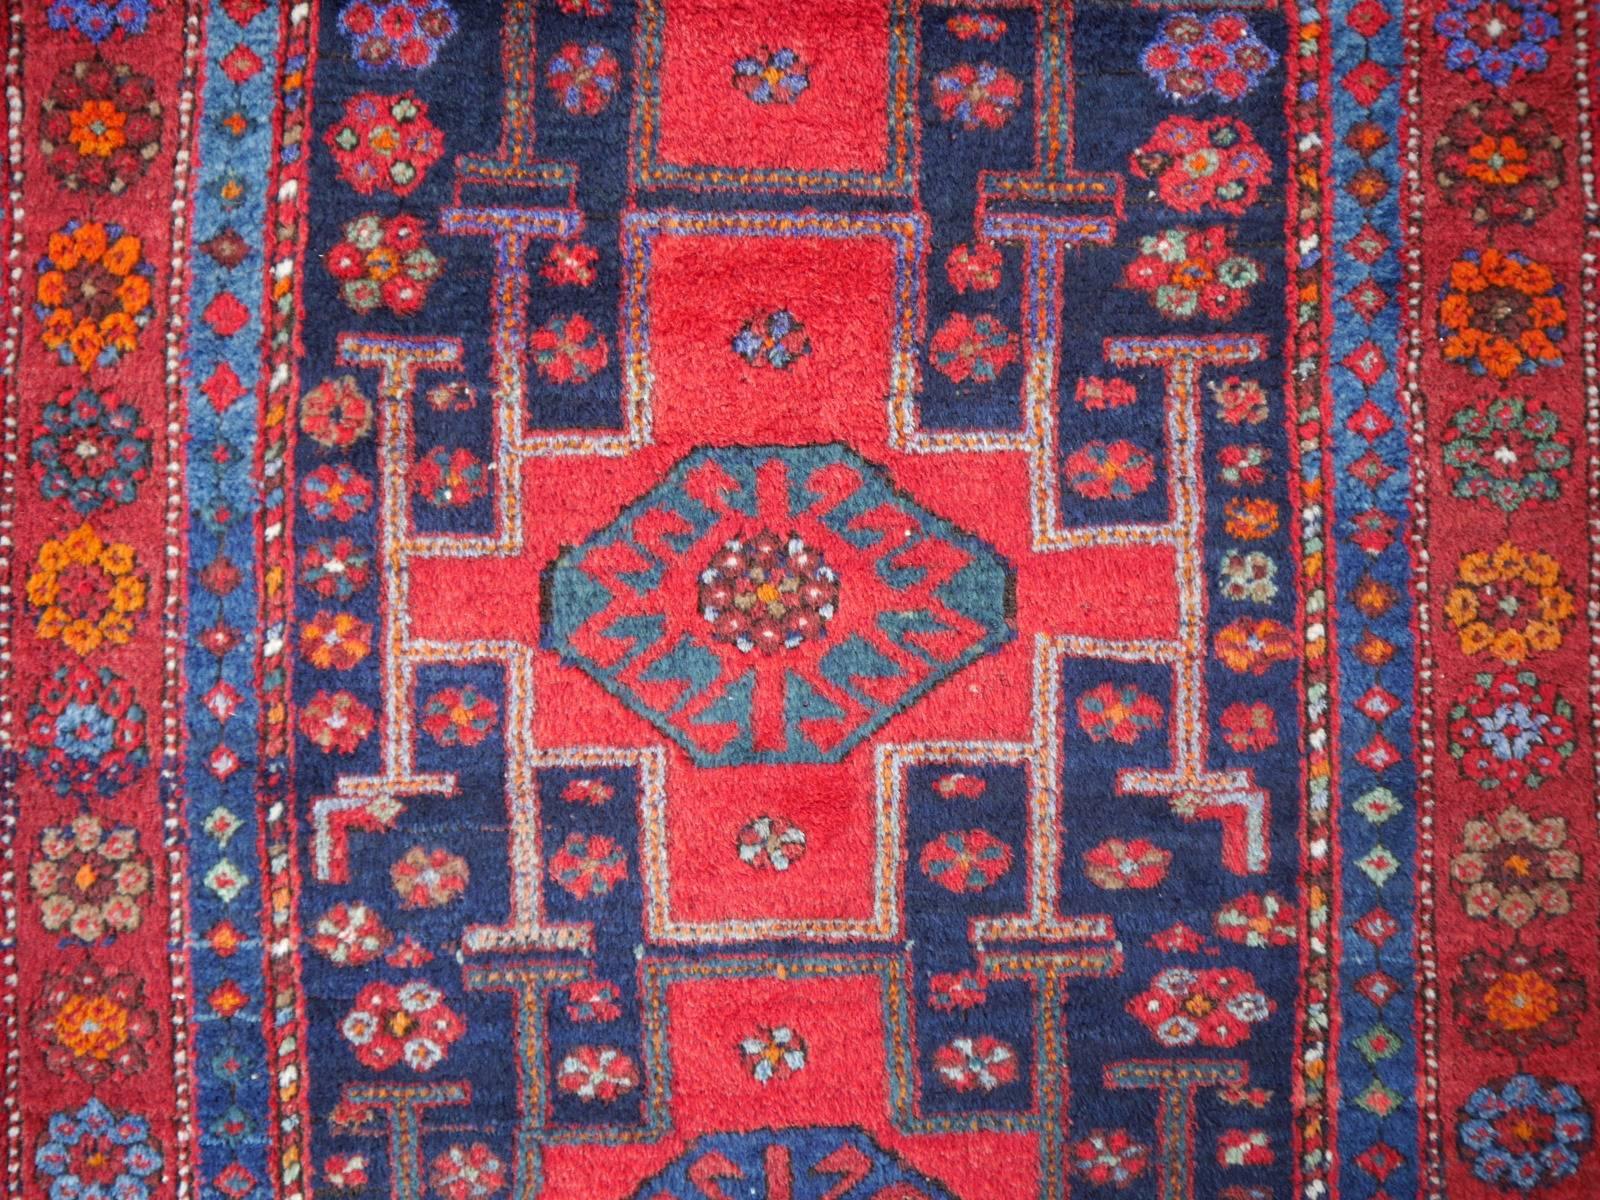 20th Century Shirvan Caucasian Vintage Carpet with Vibrant Colors Red Blue Orange Green